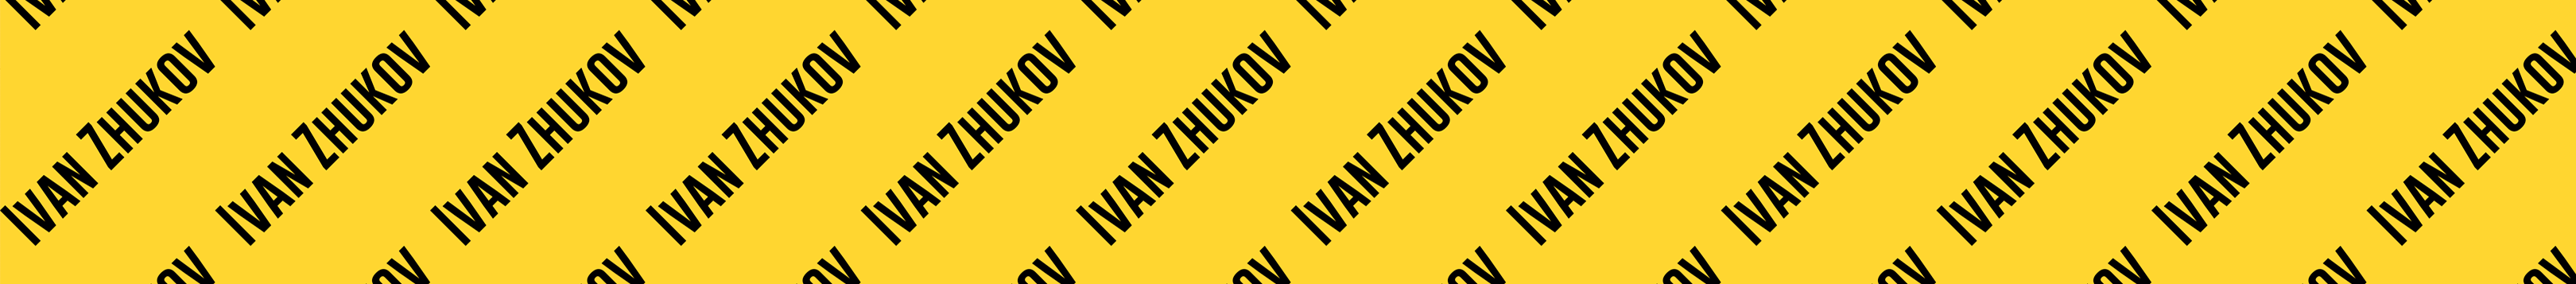 Ivan Zhukov's profile banner